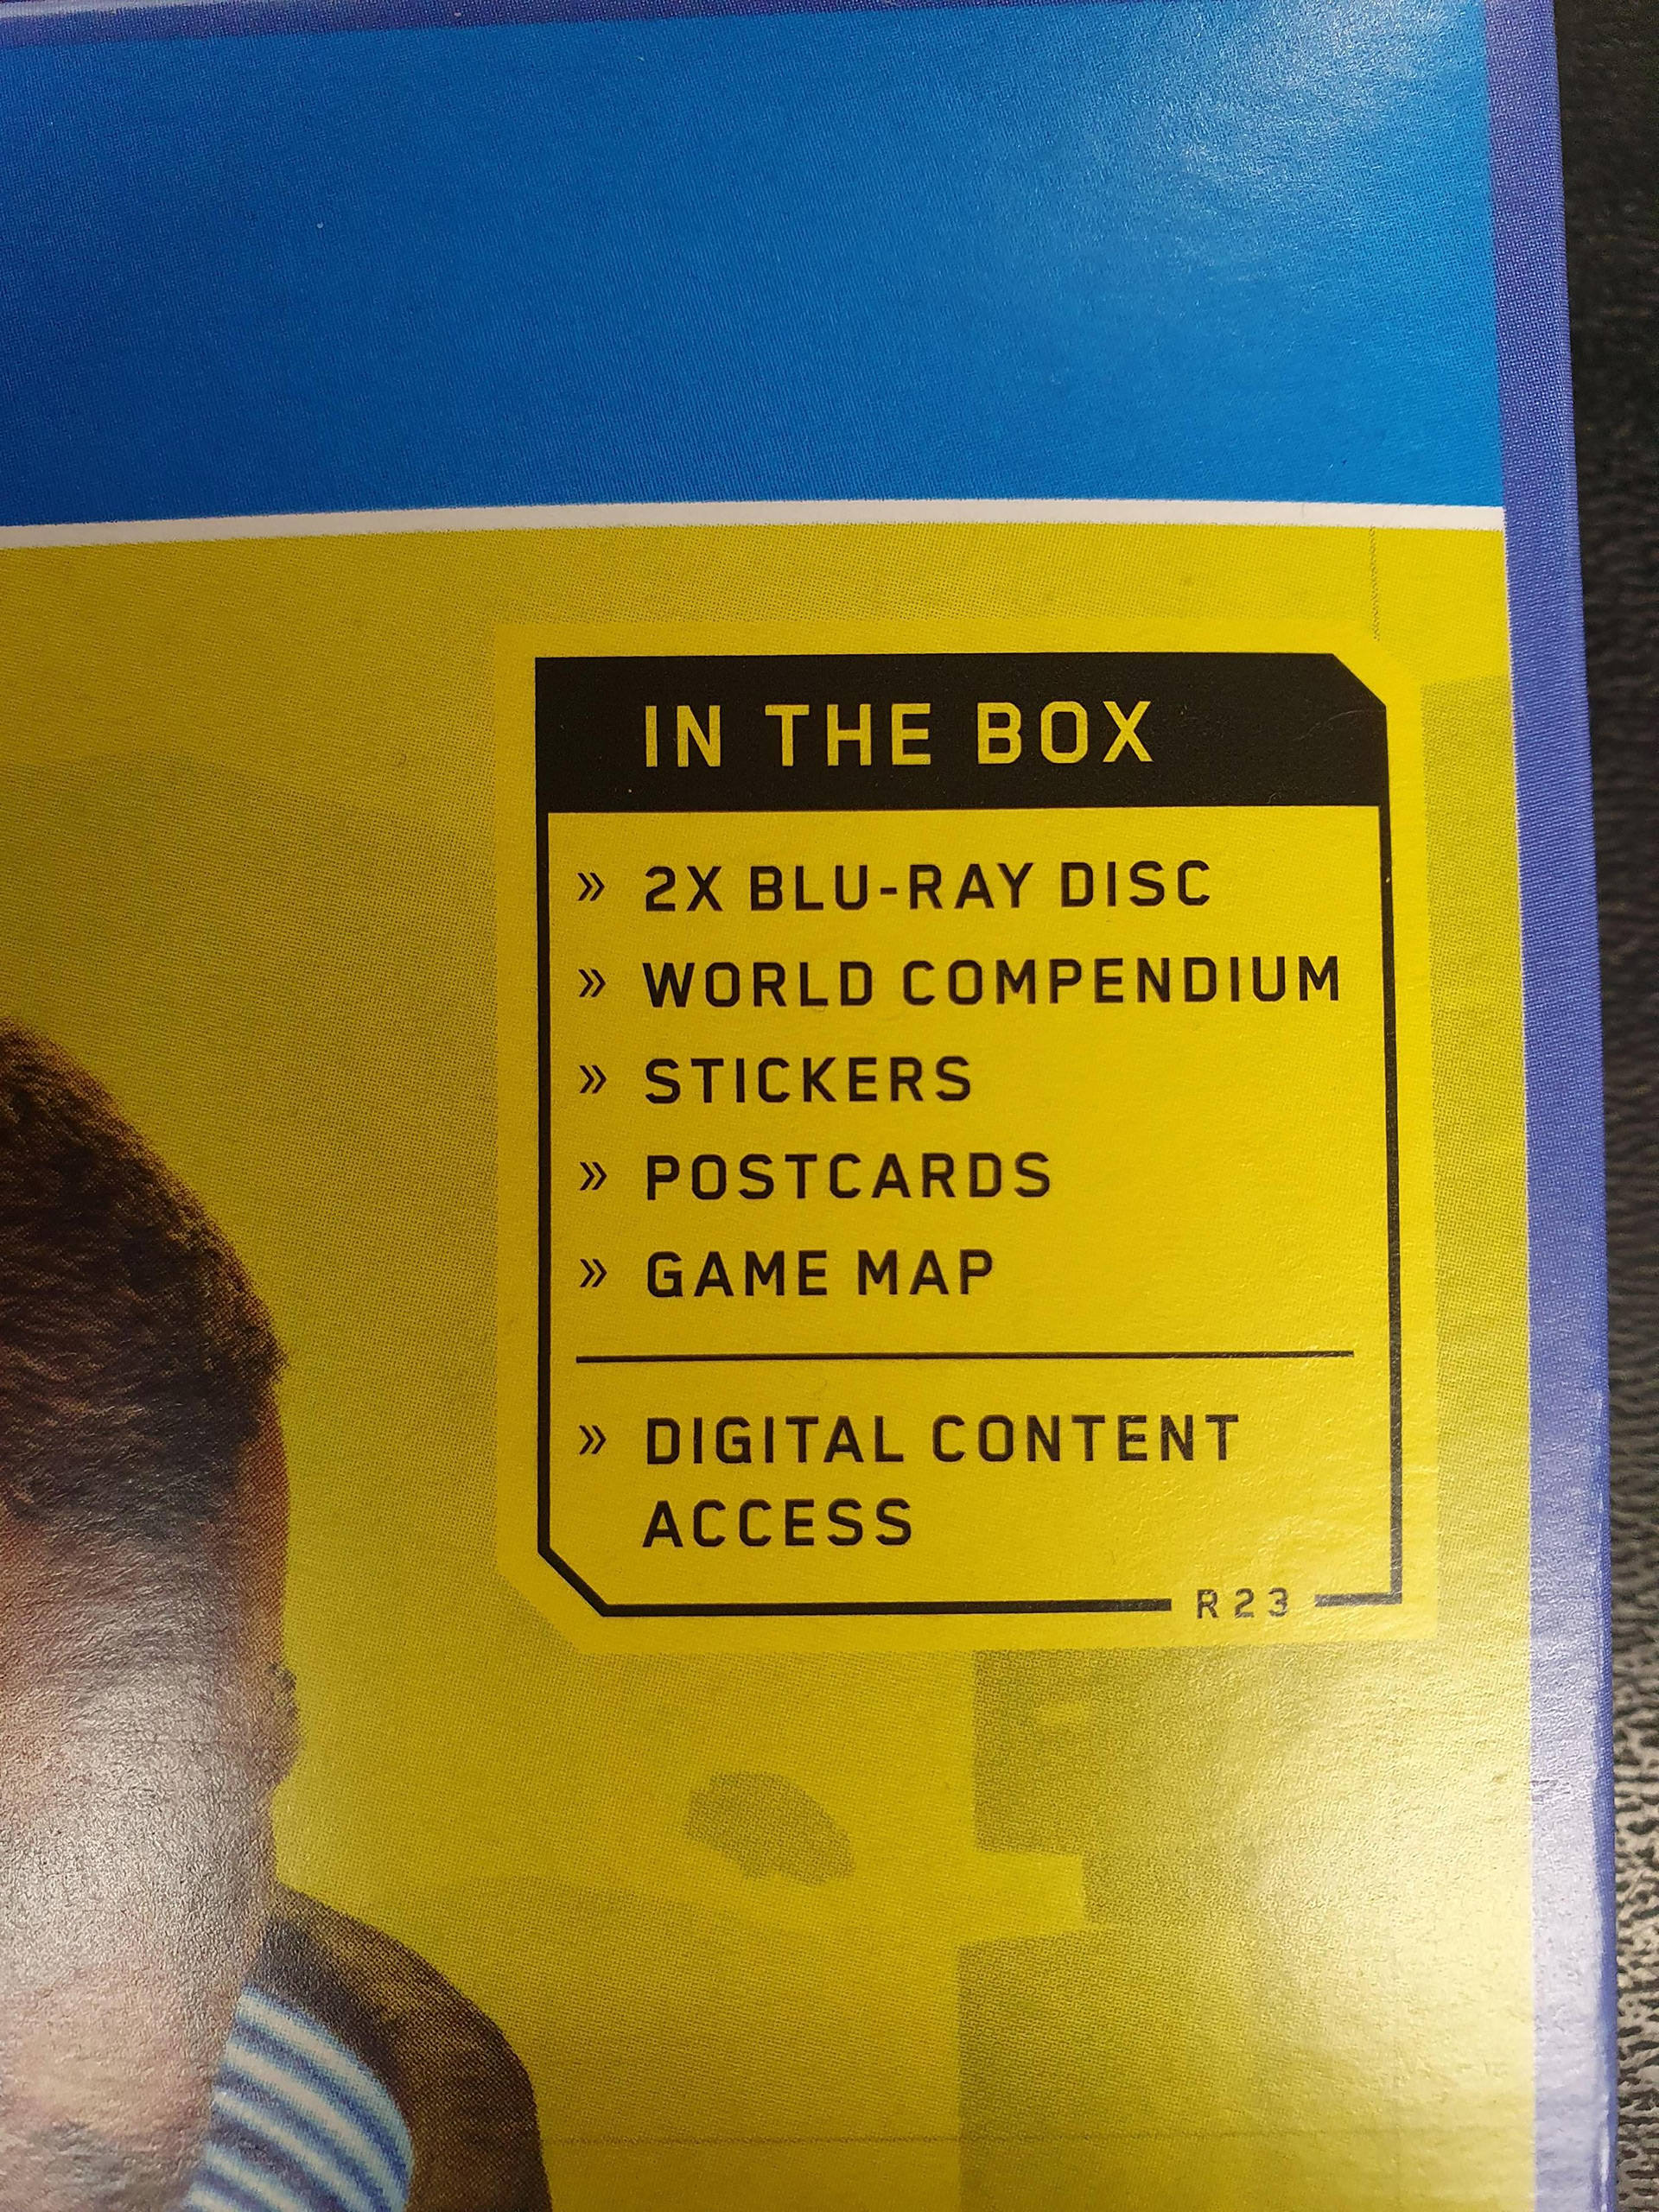 بخش جلوی کاور بازی Cyberpunk 2077 و اشاره به دو دیسک بودن آن